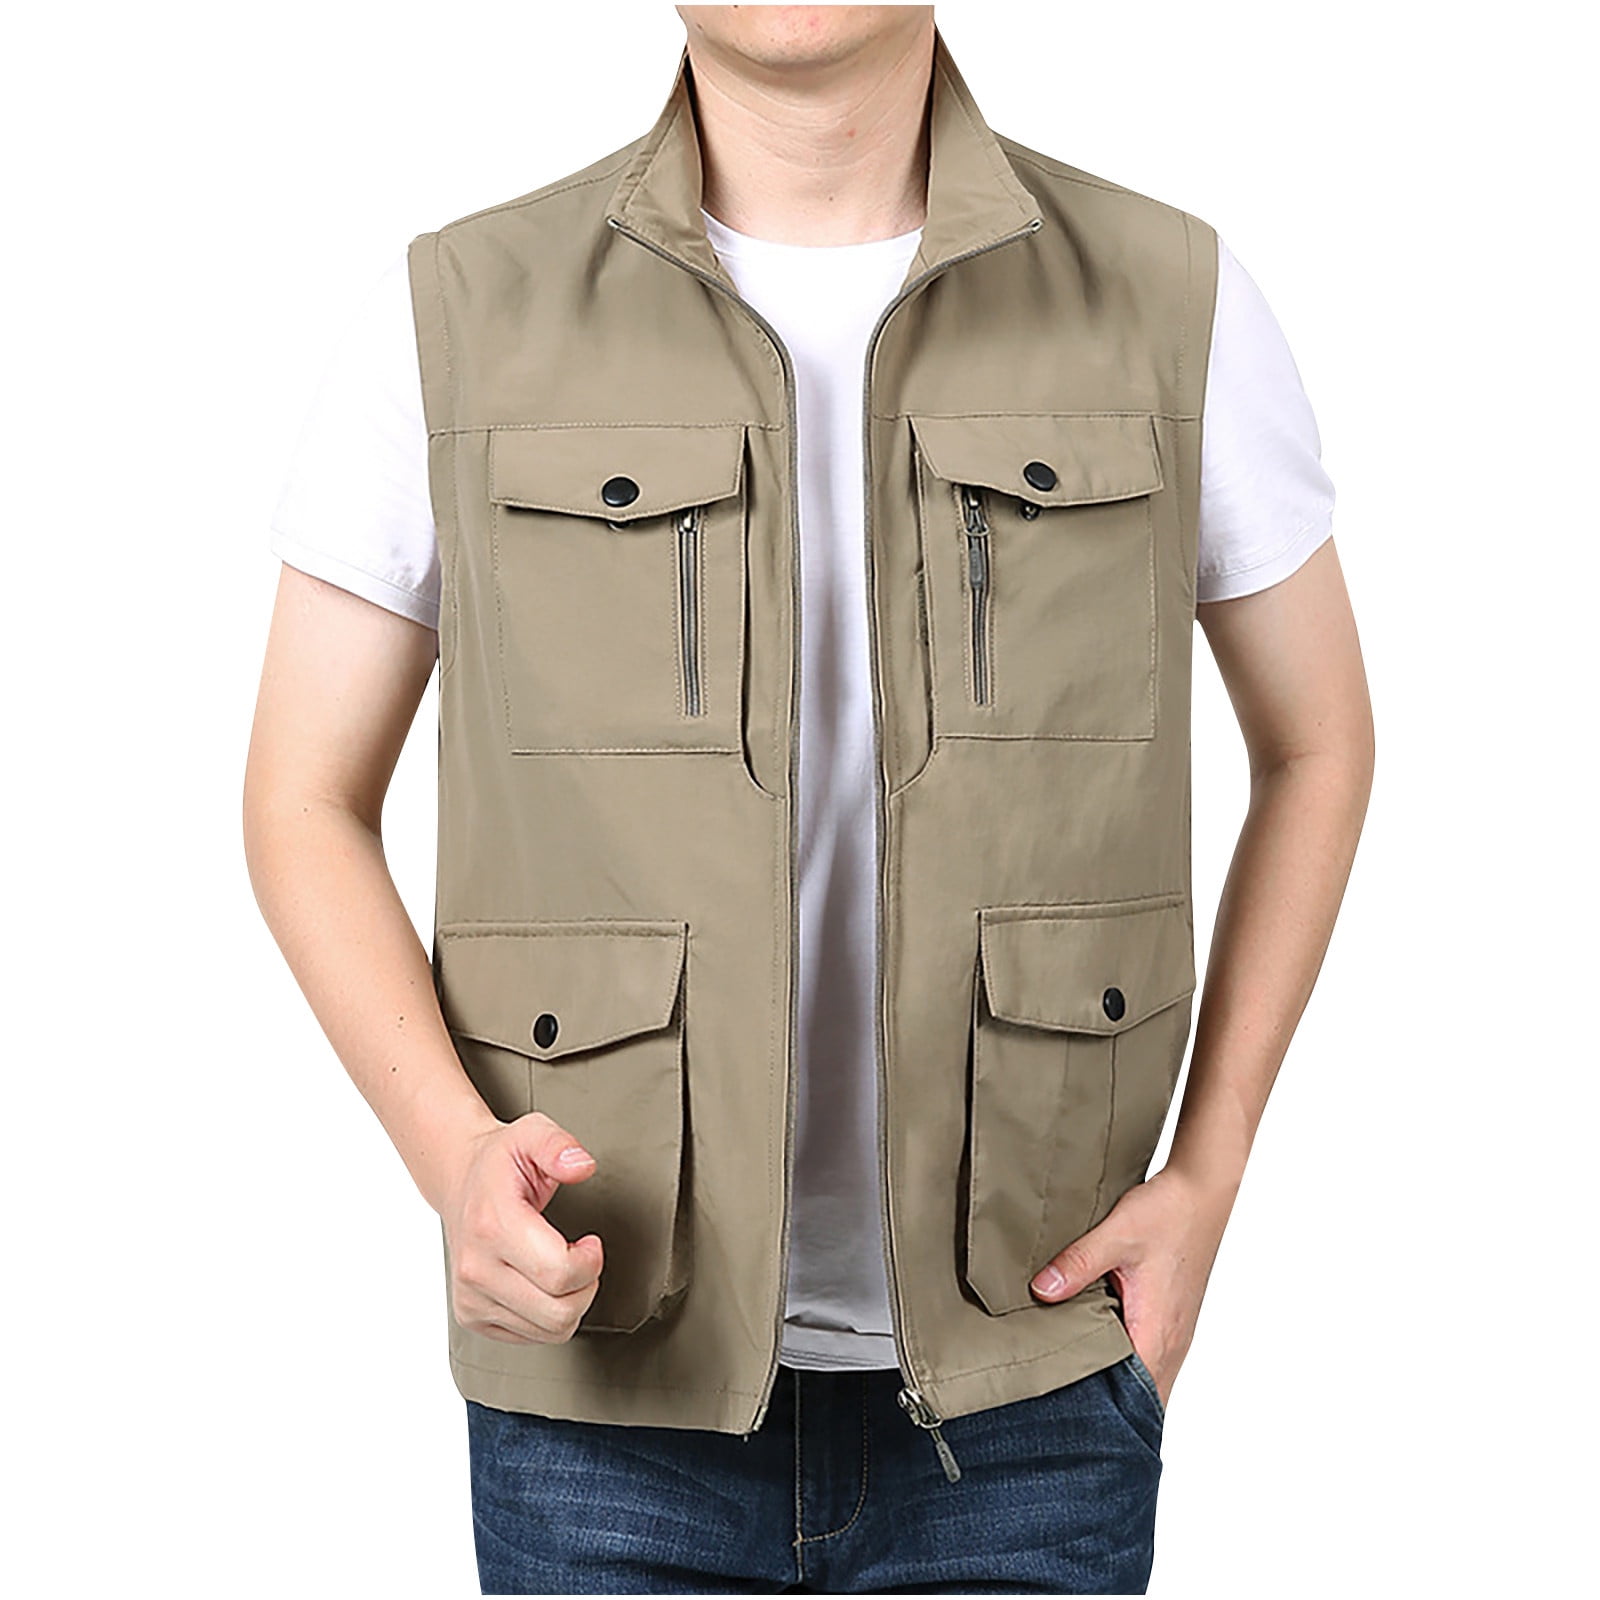 VSSSJ Men's Work Vest with Multi-Pockets Relaxed Solid Color Sleeveless ...